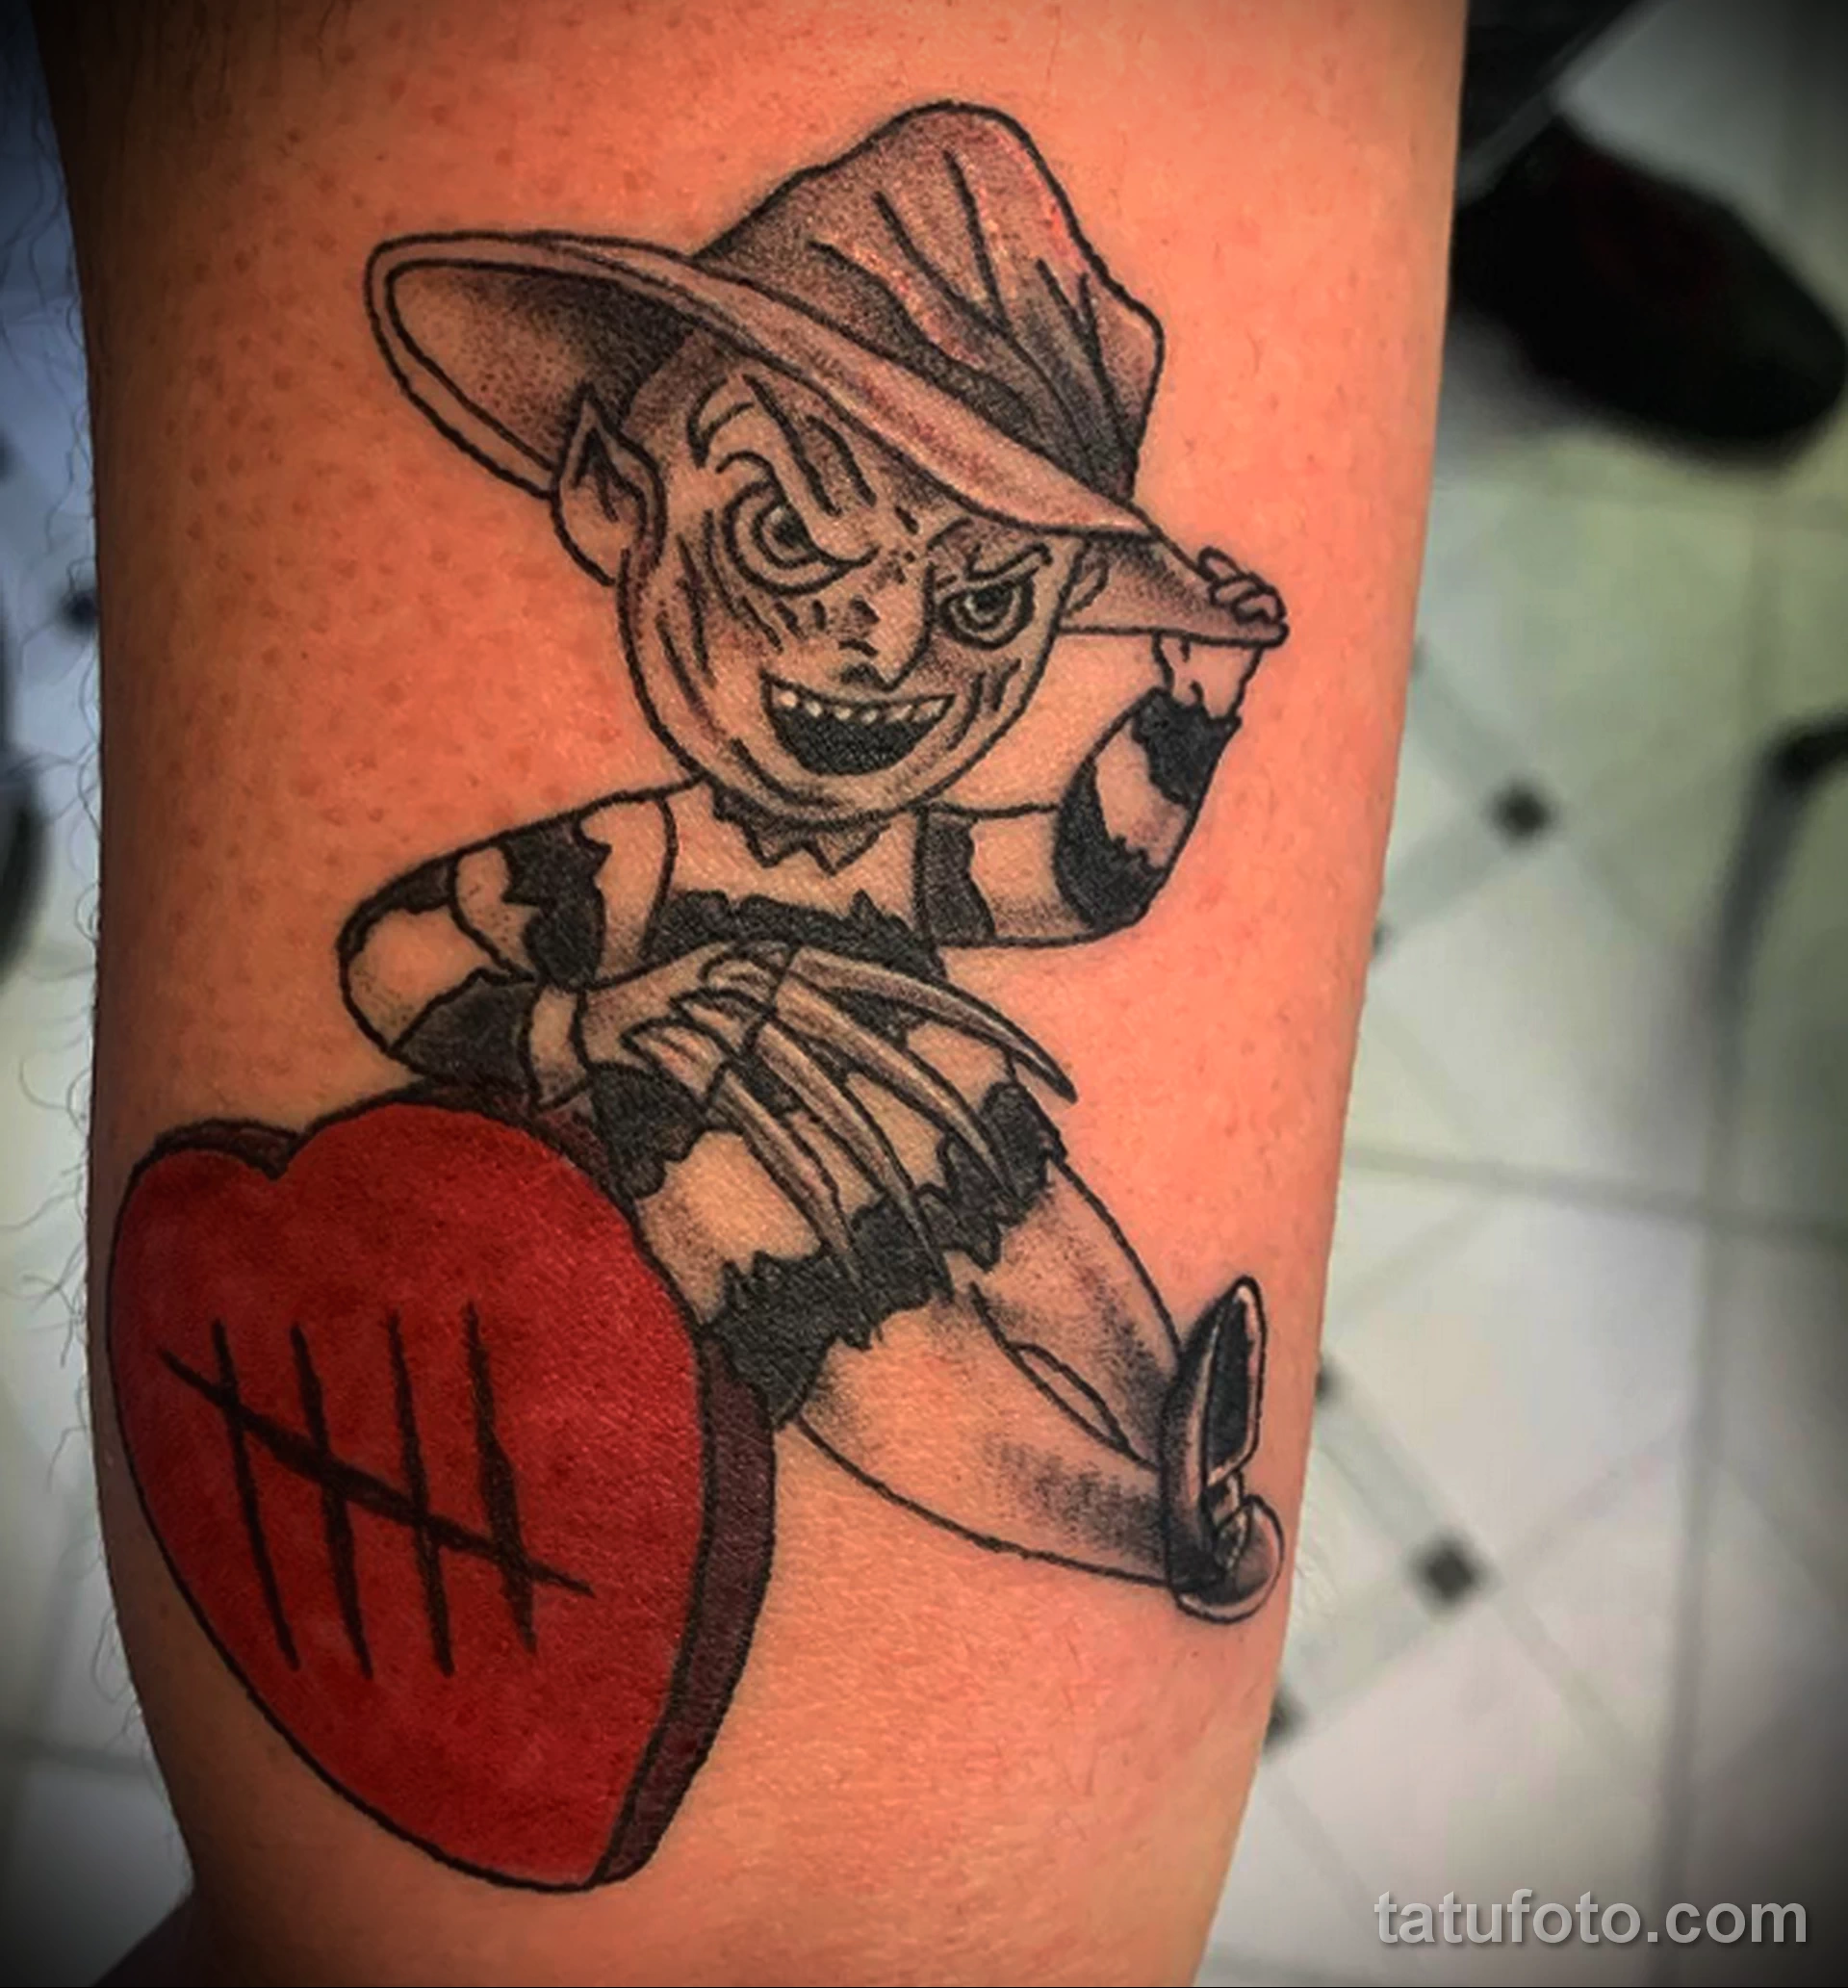 Jason Voorhees Freddy Krueger tattoo nightmare on Elm Street Friday the  13th horror sleeve traditional style ta  Freddy krueger tattoo Tattoo  nightmares Tattoos